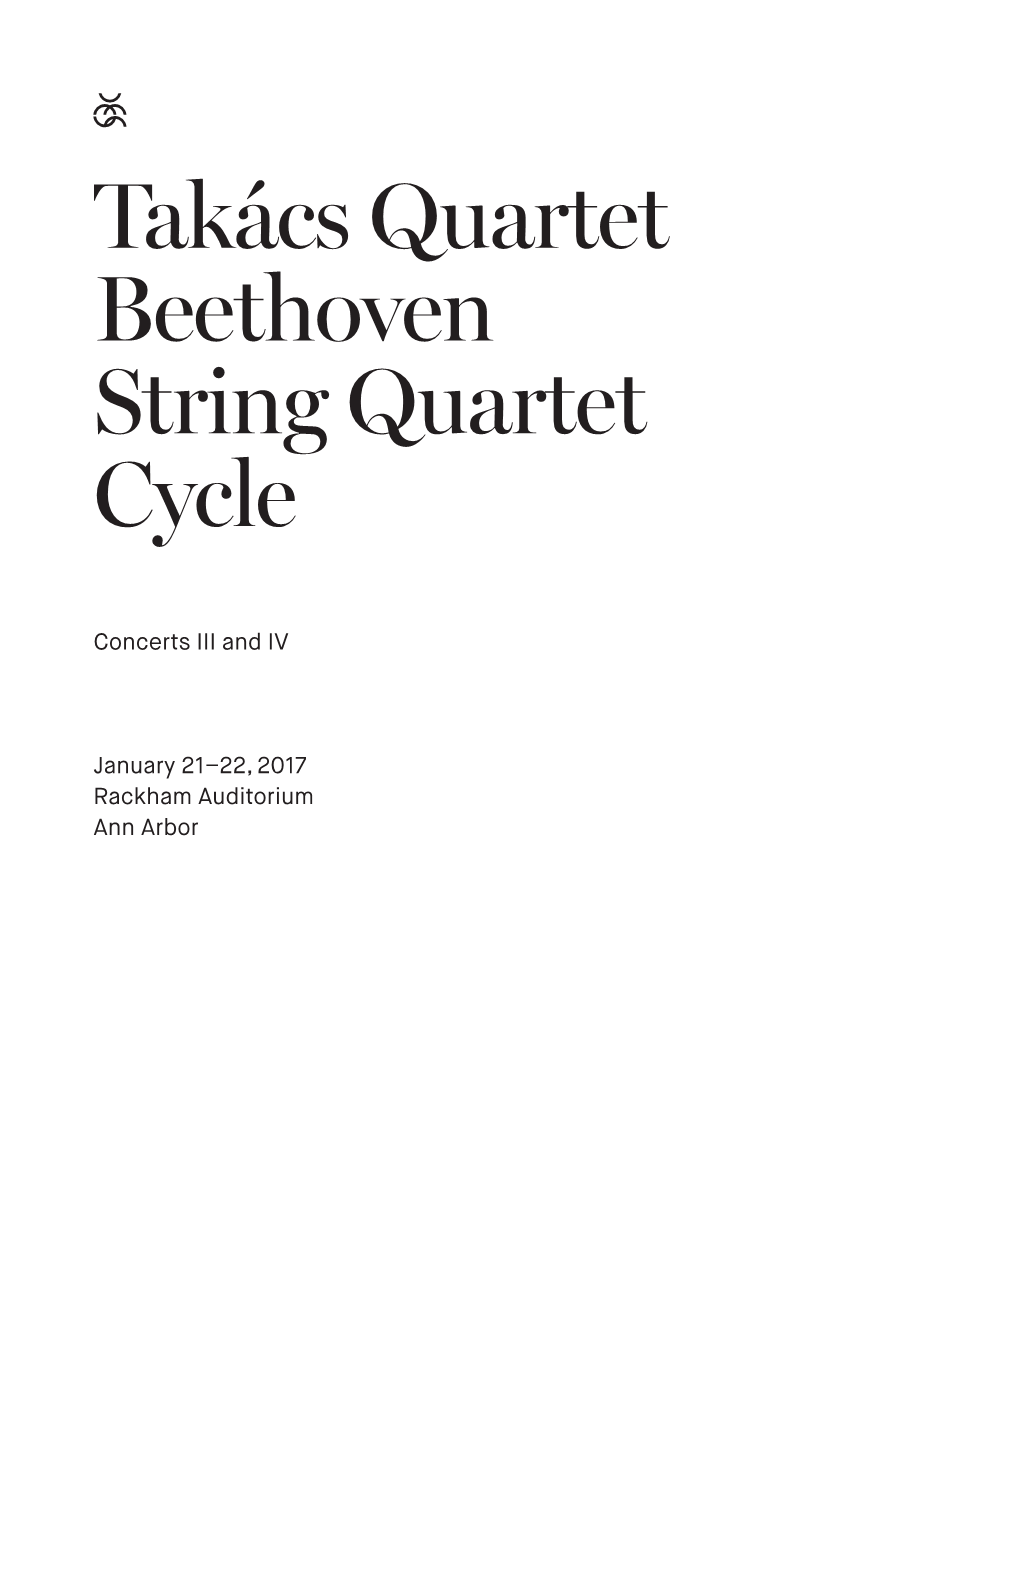 Takács Quartet Beethoven String Quartet Cycle